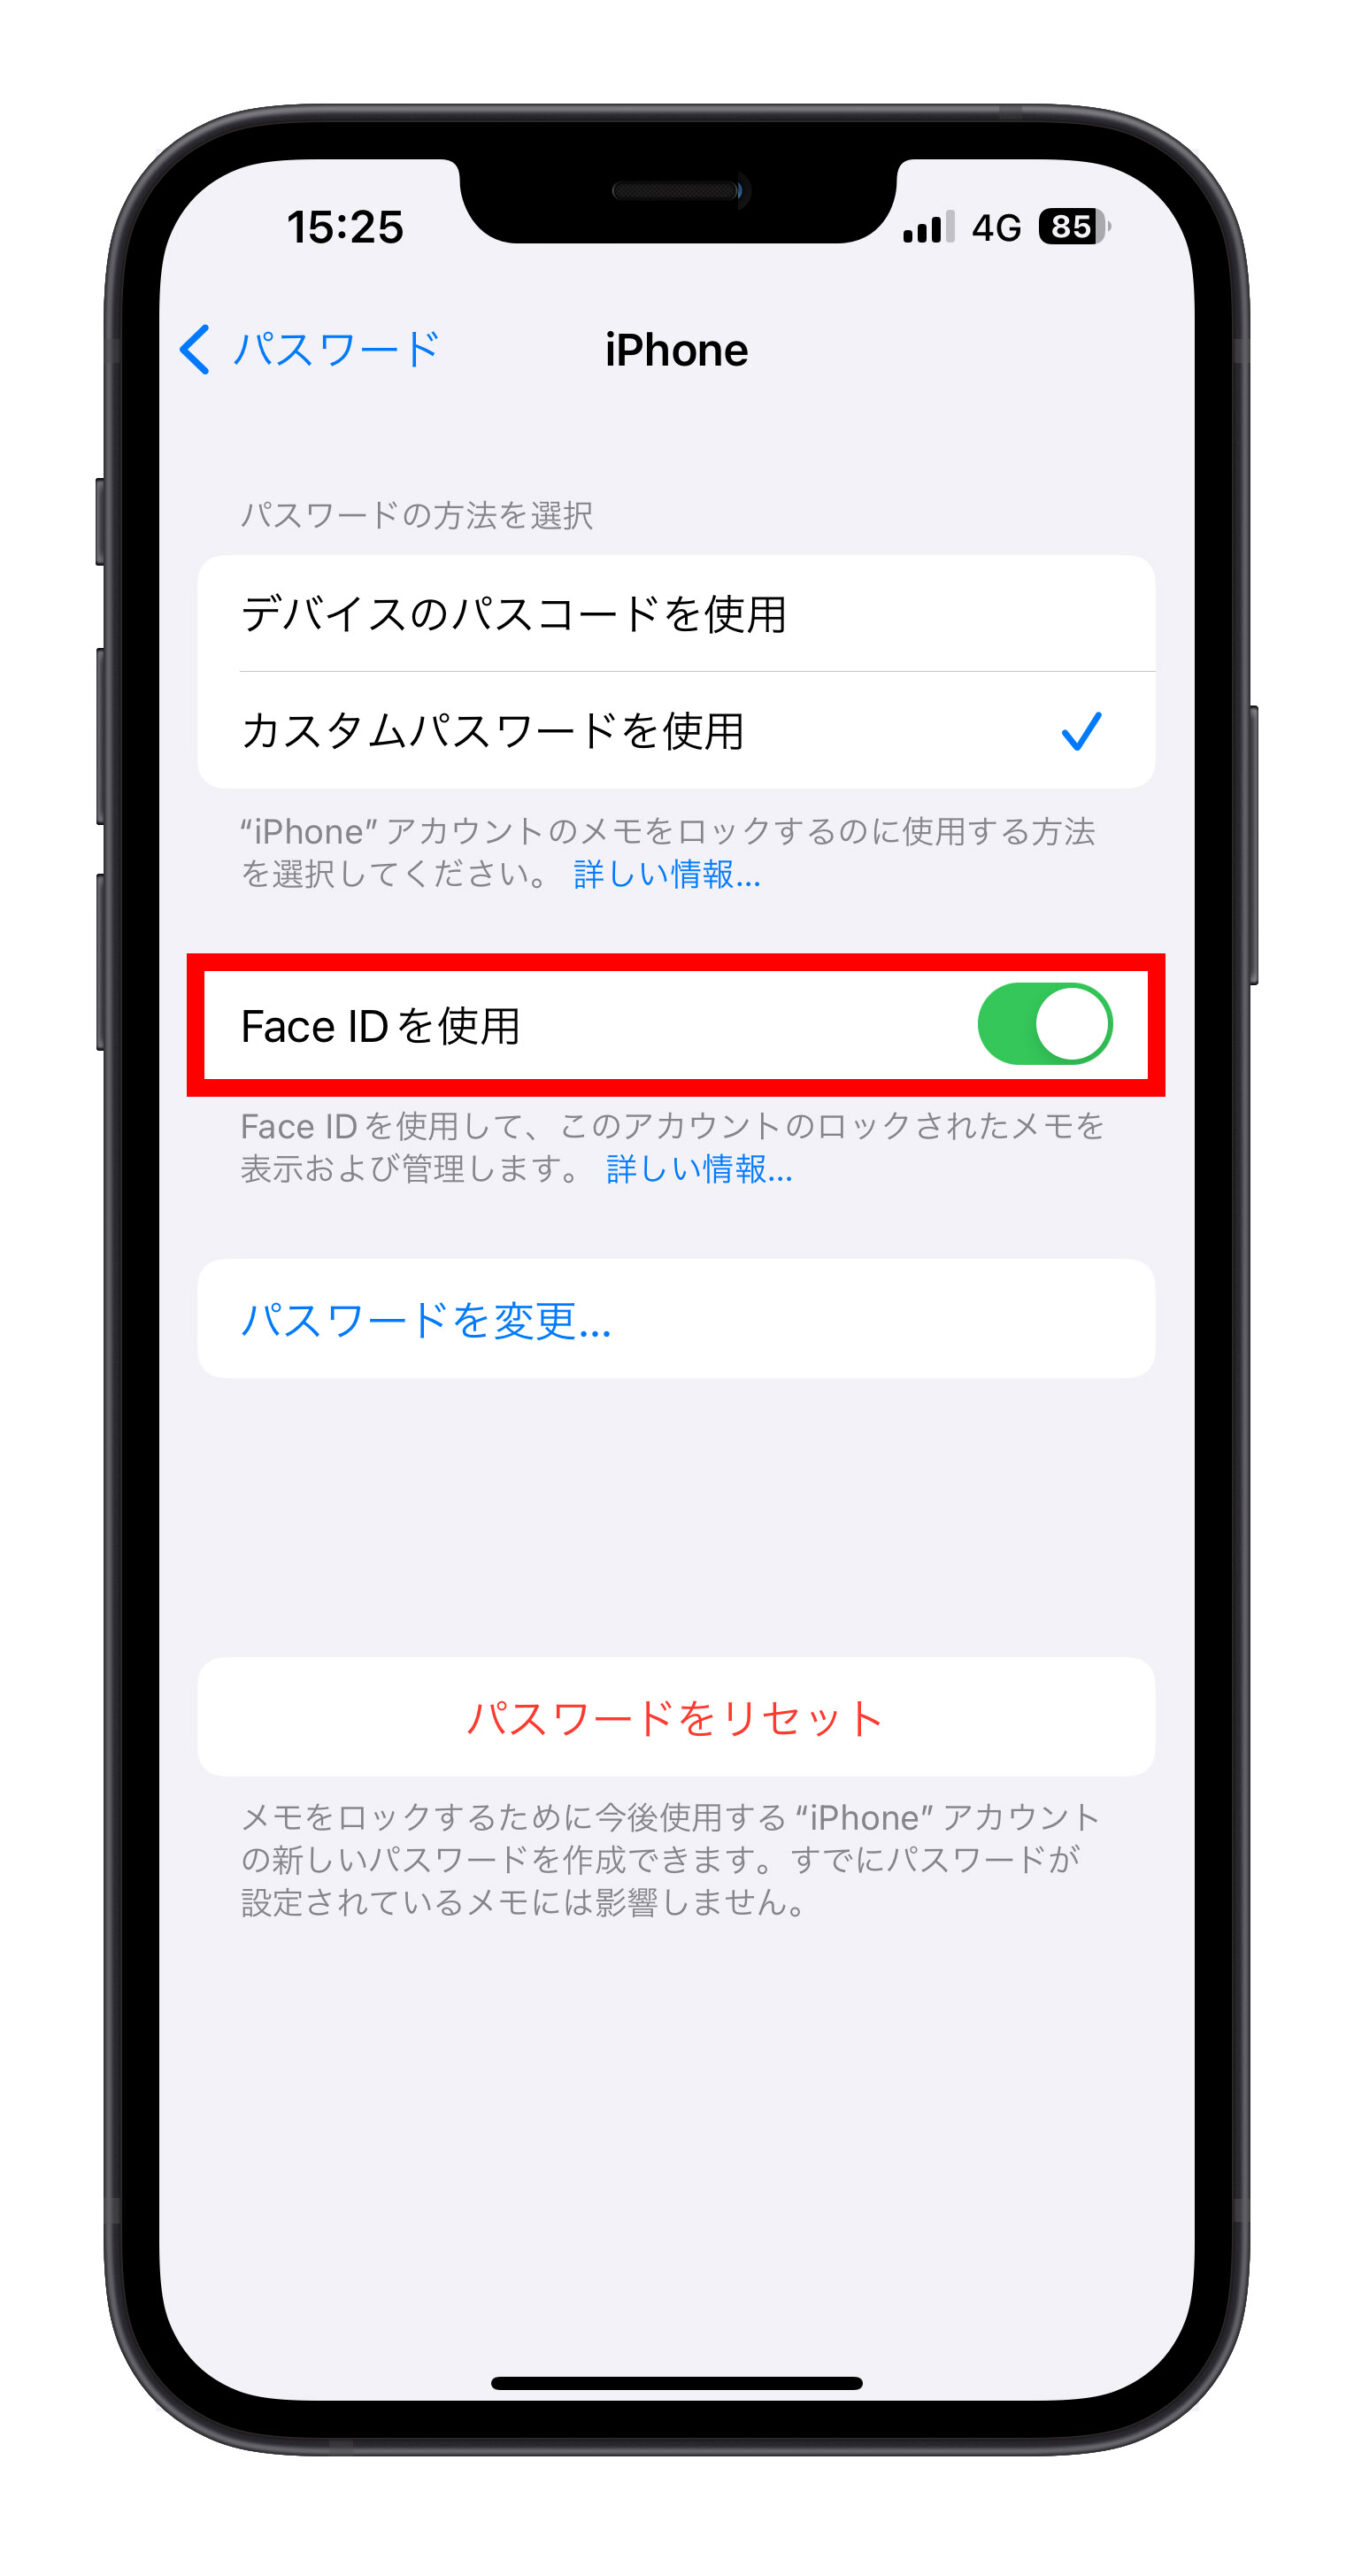 iPhone メモ ロック Face ID